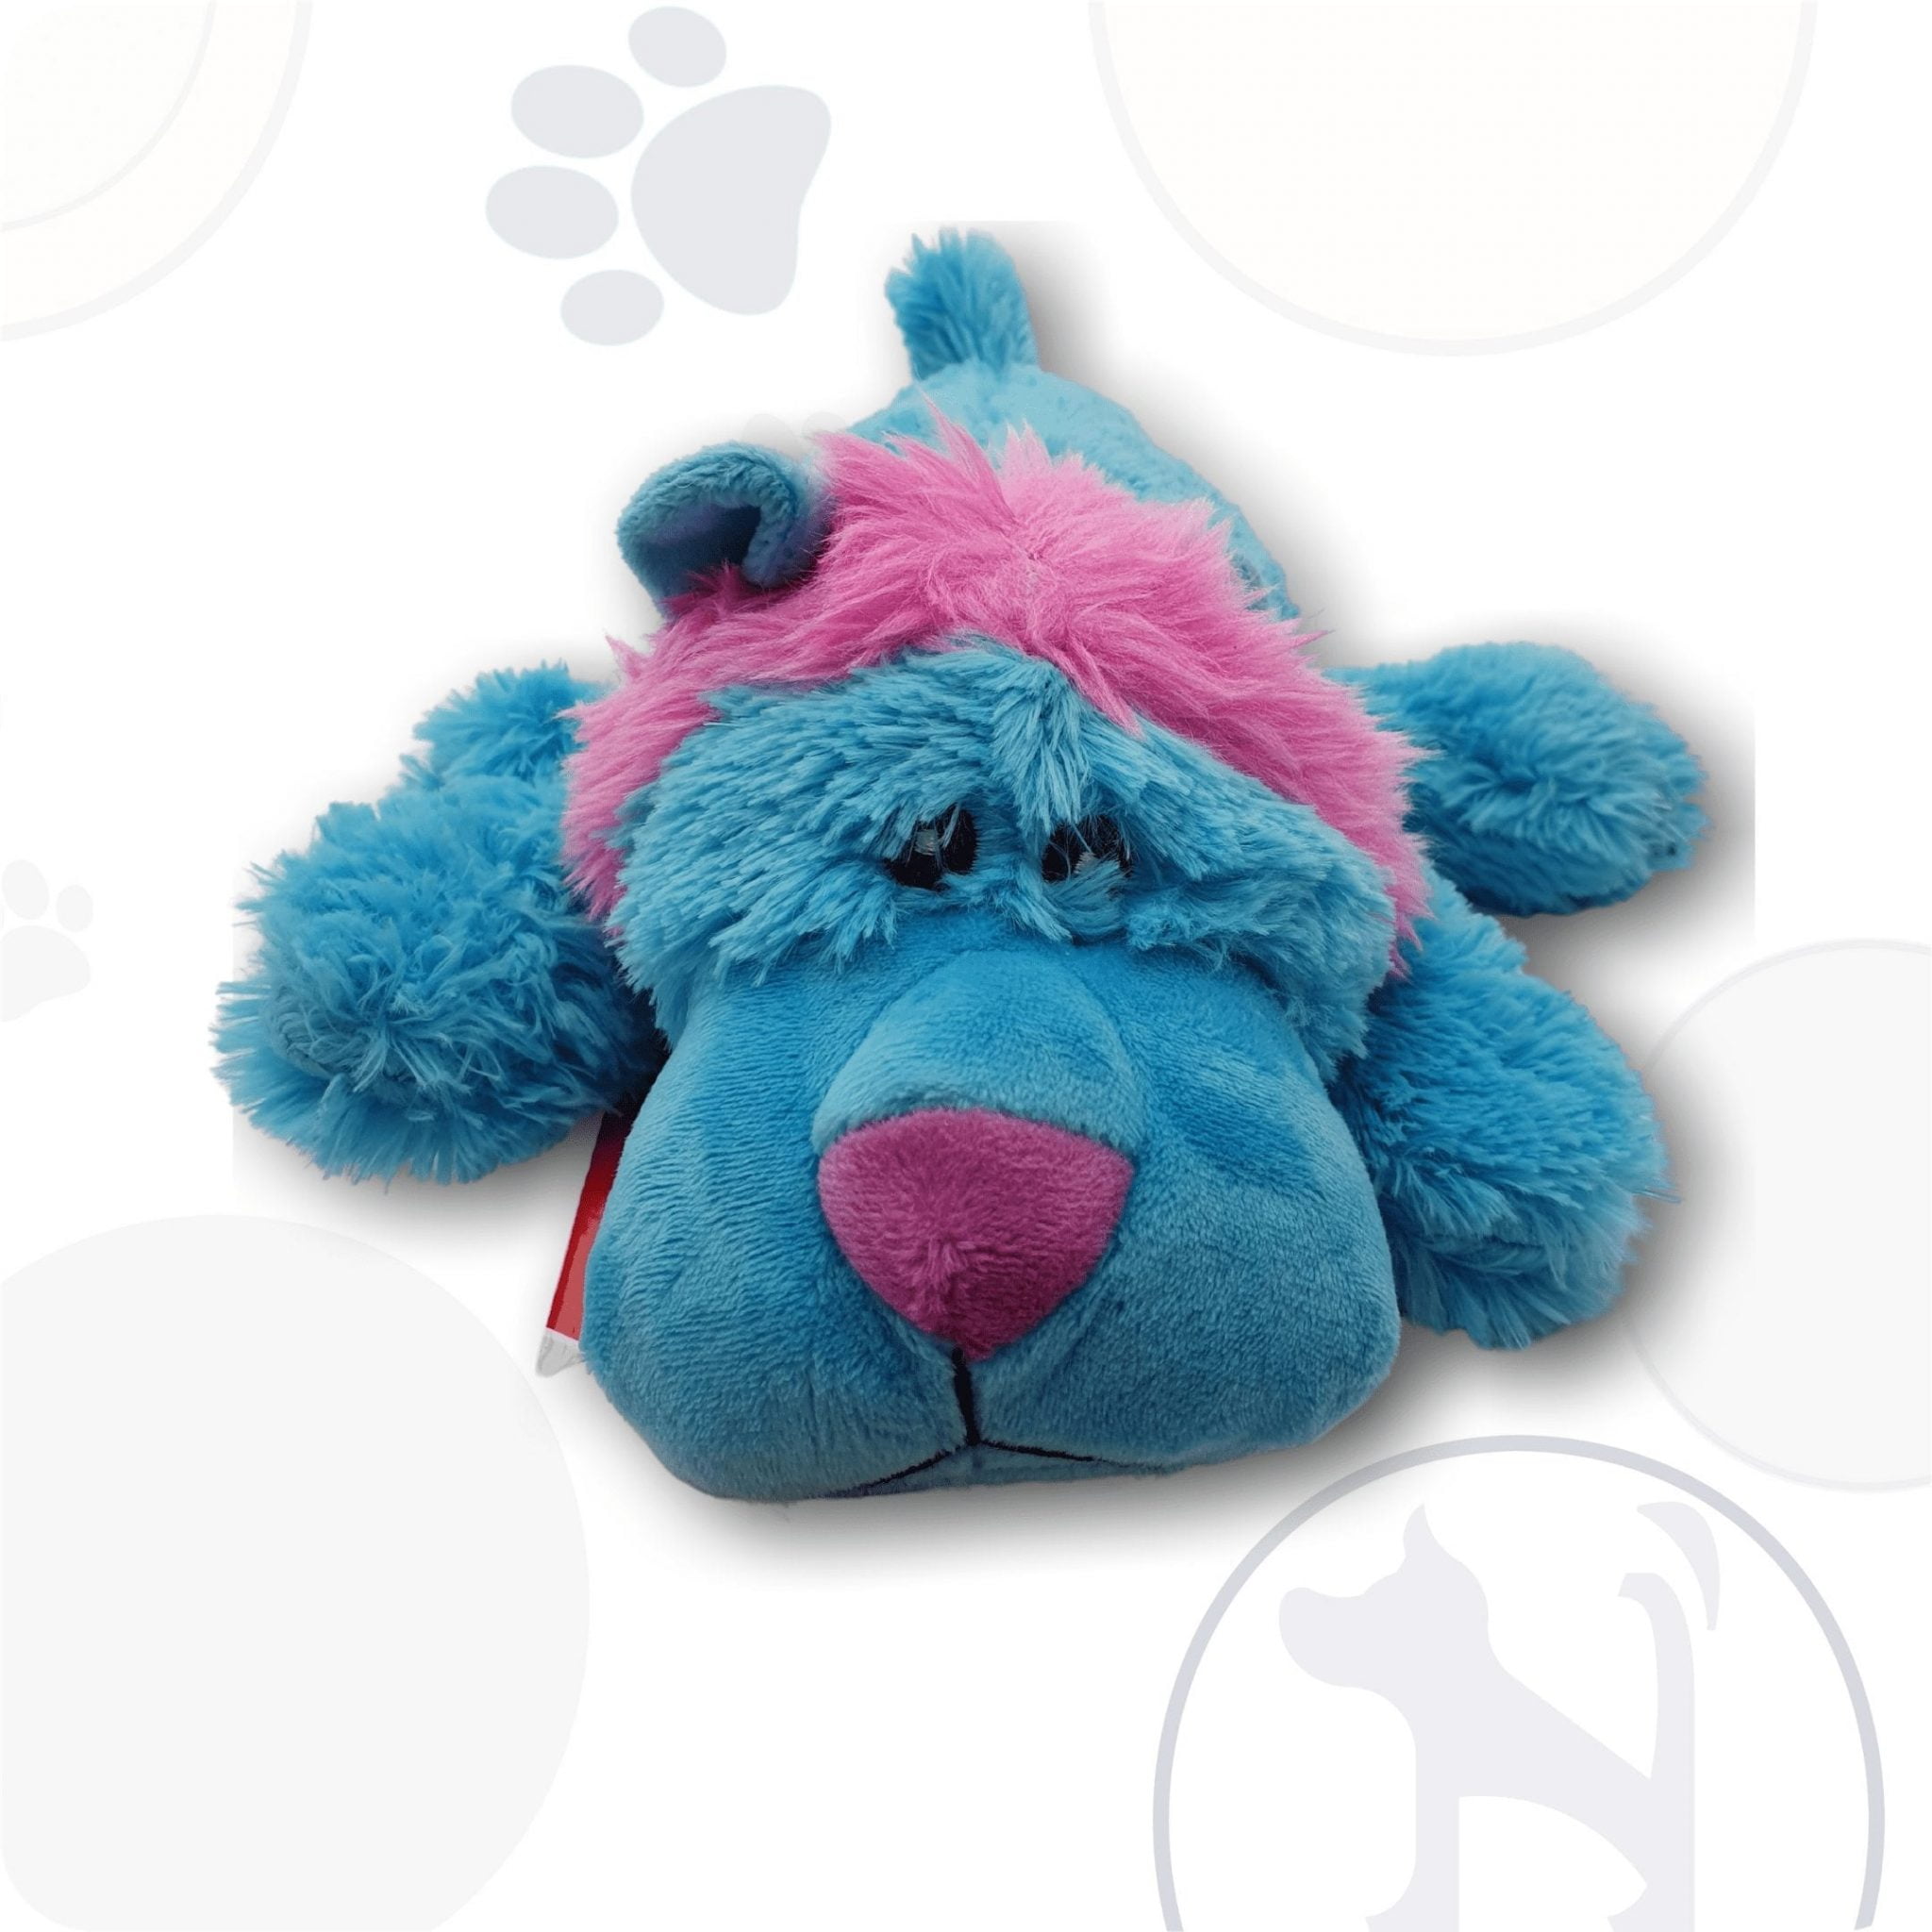 KONG Cozie Blue & Pink Lion Plush Dog Toy - Medium